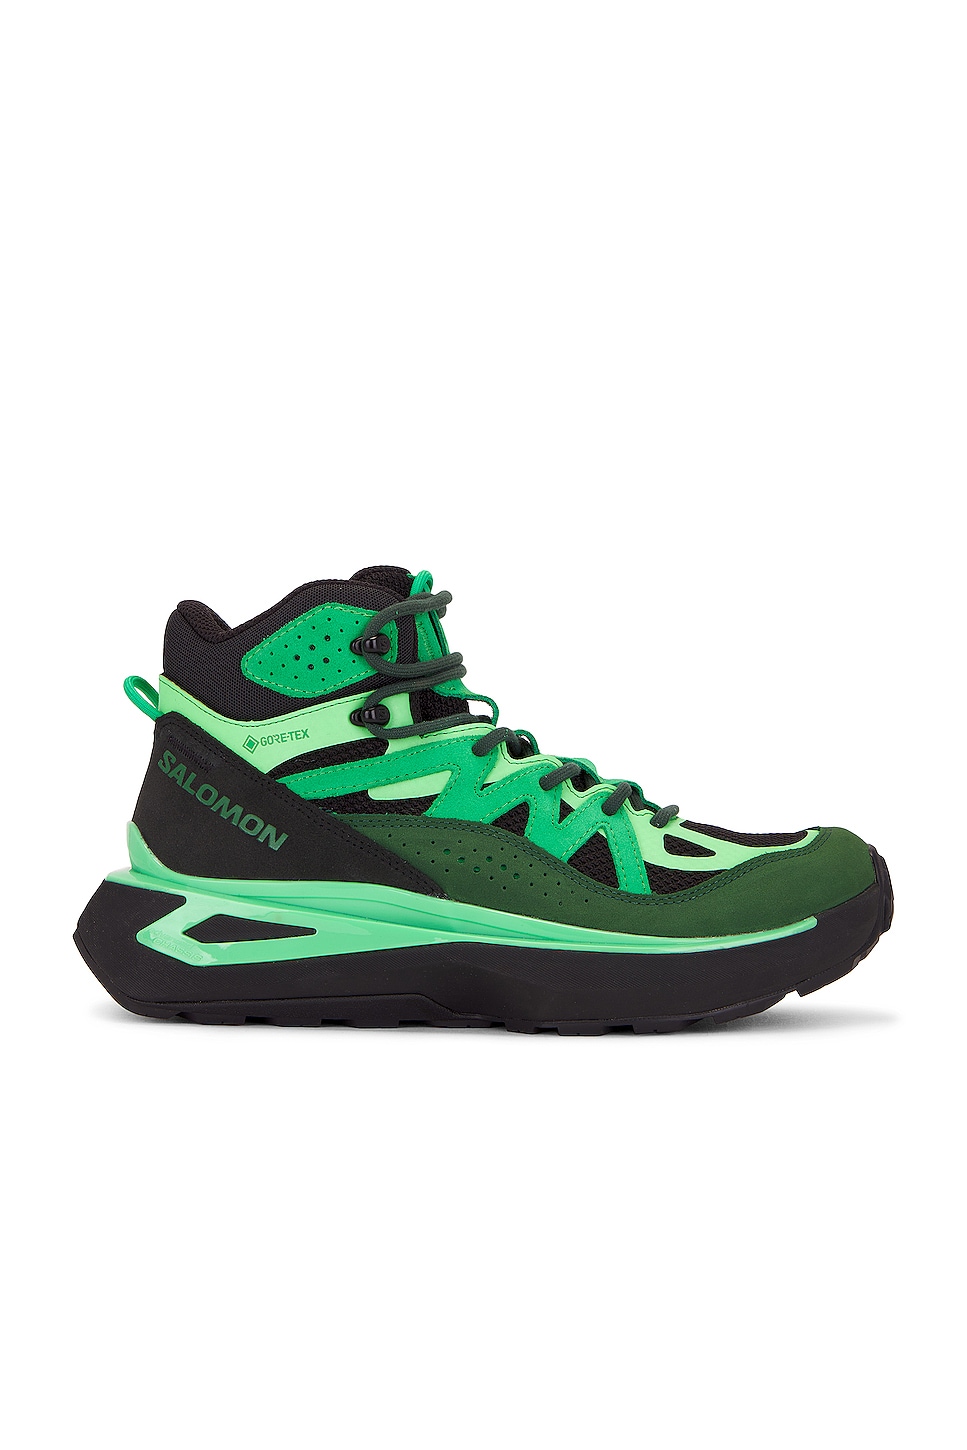 Image 1 of Salomon Odyssey Elmt Mid Gtx Sneaker in Eden, Bright Green, & Black